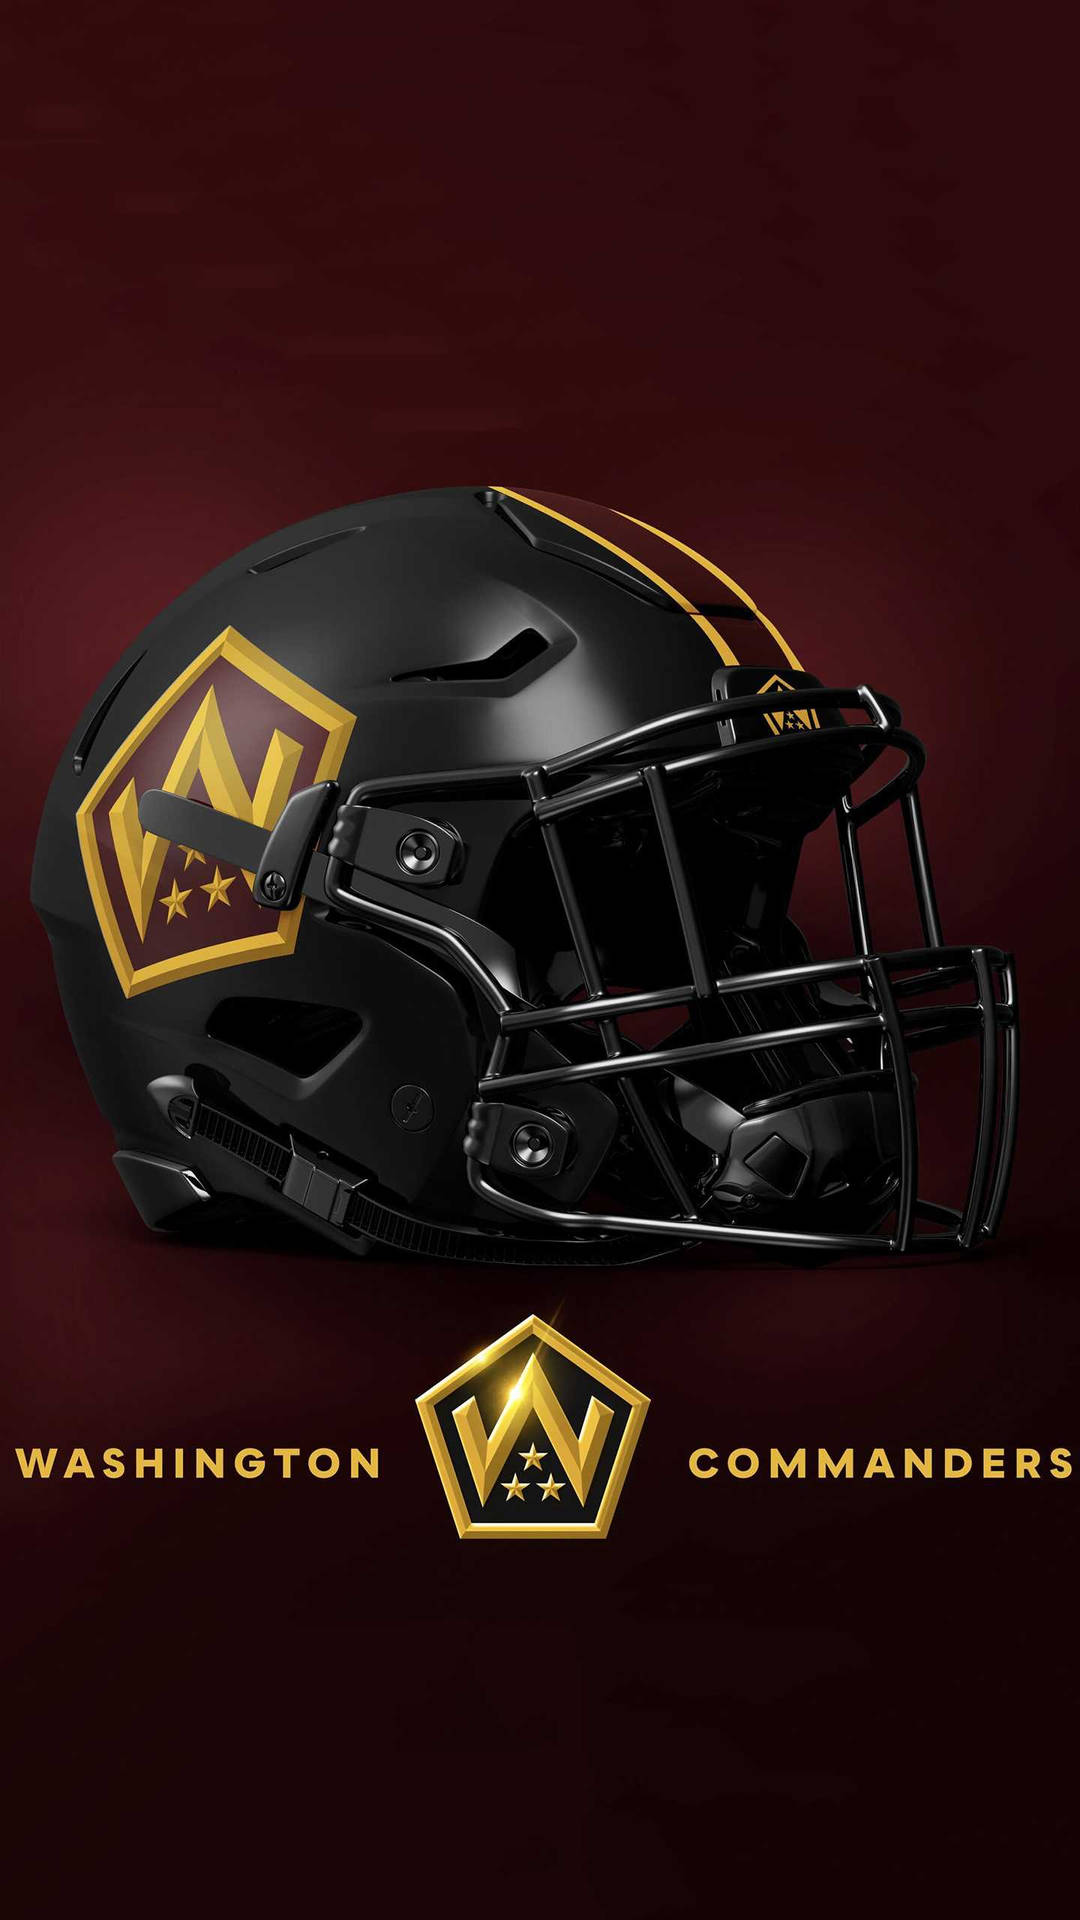 washington commander's helmet